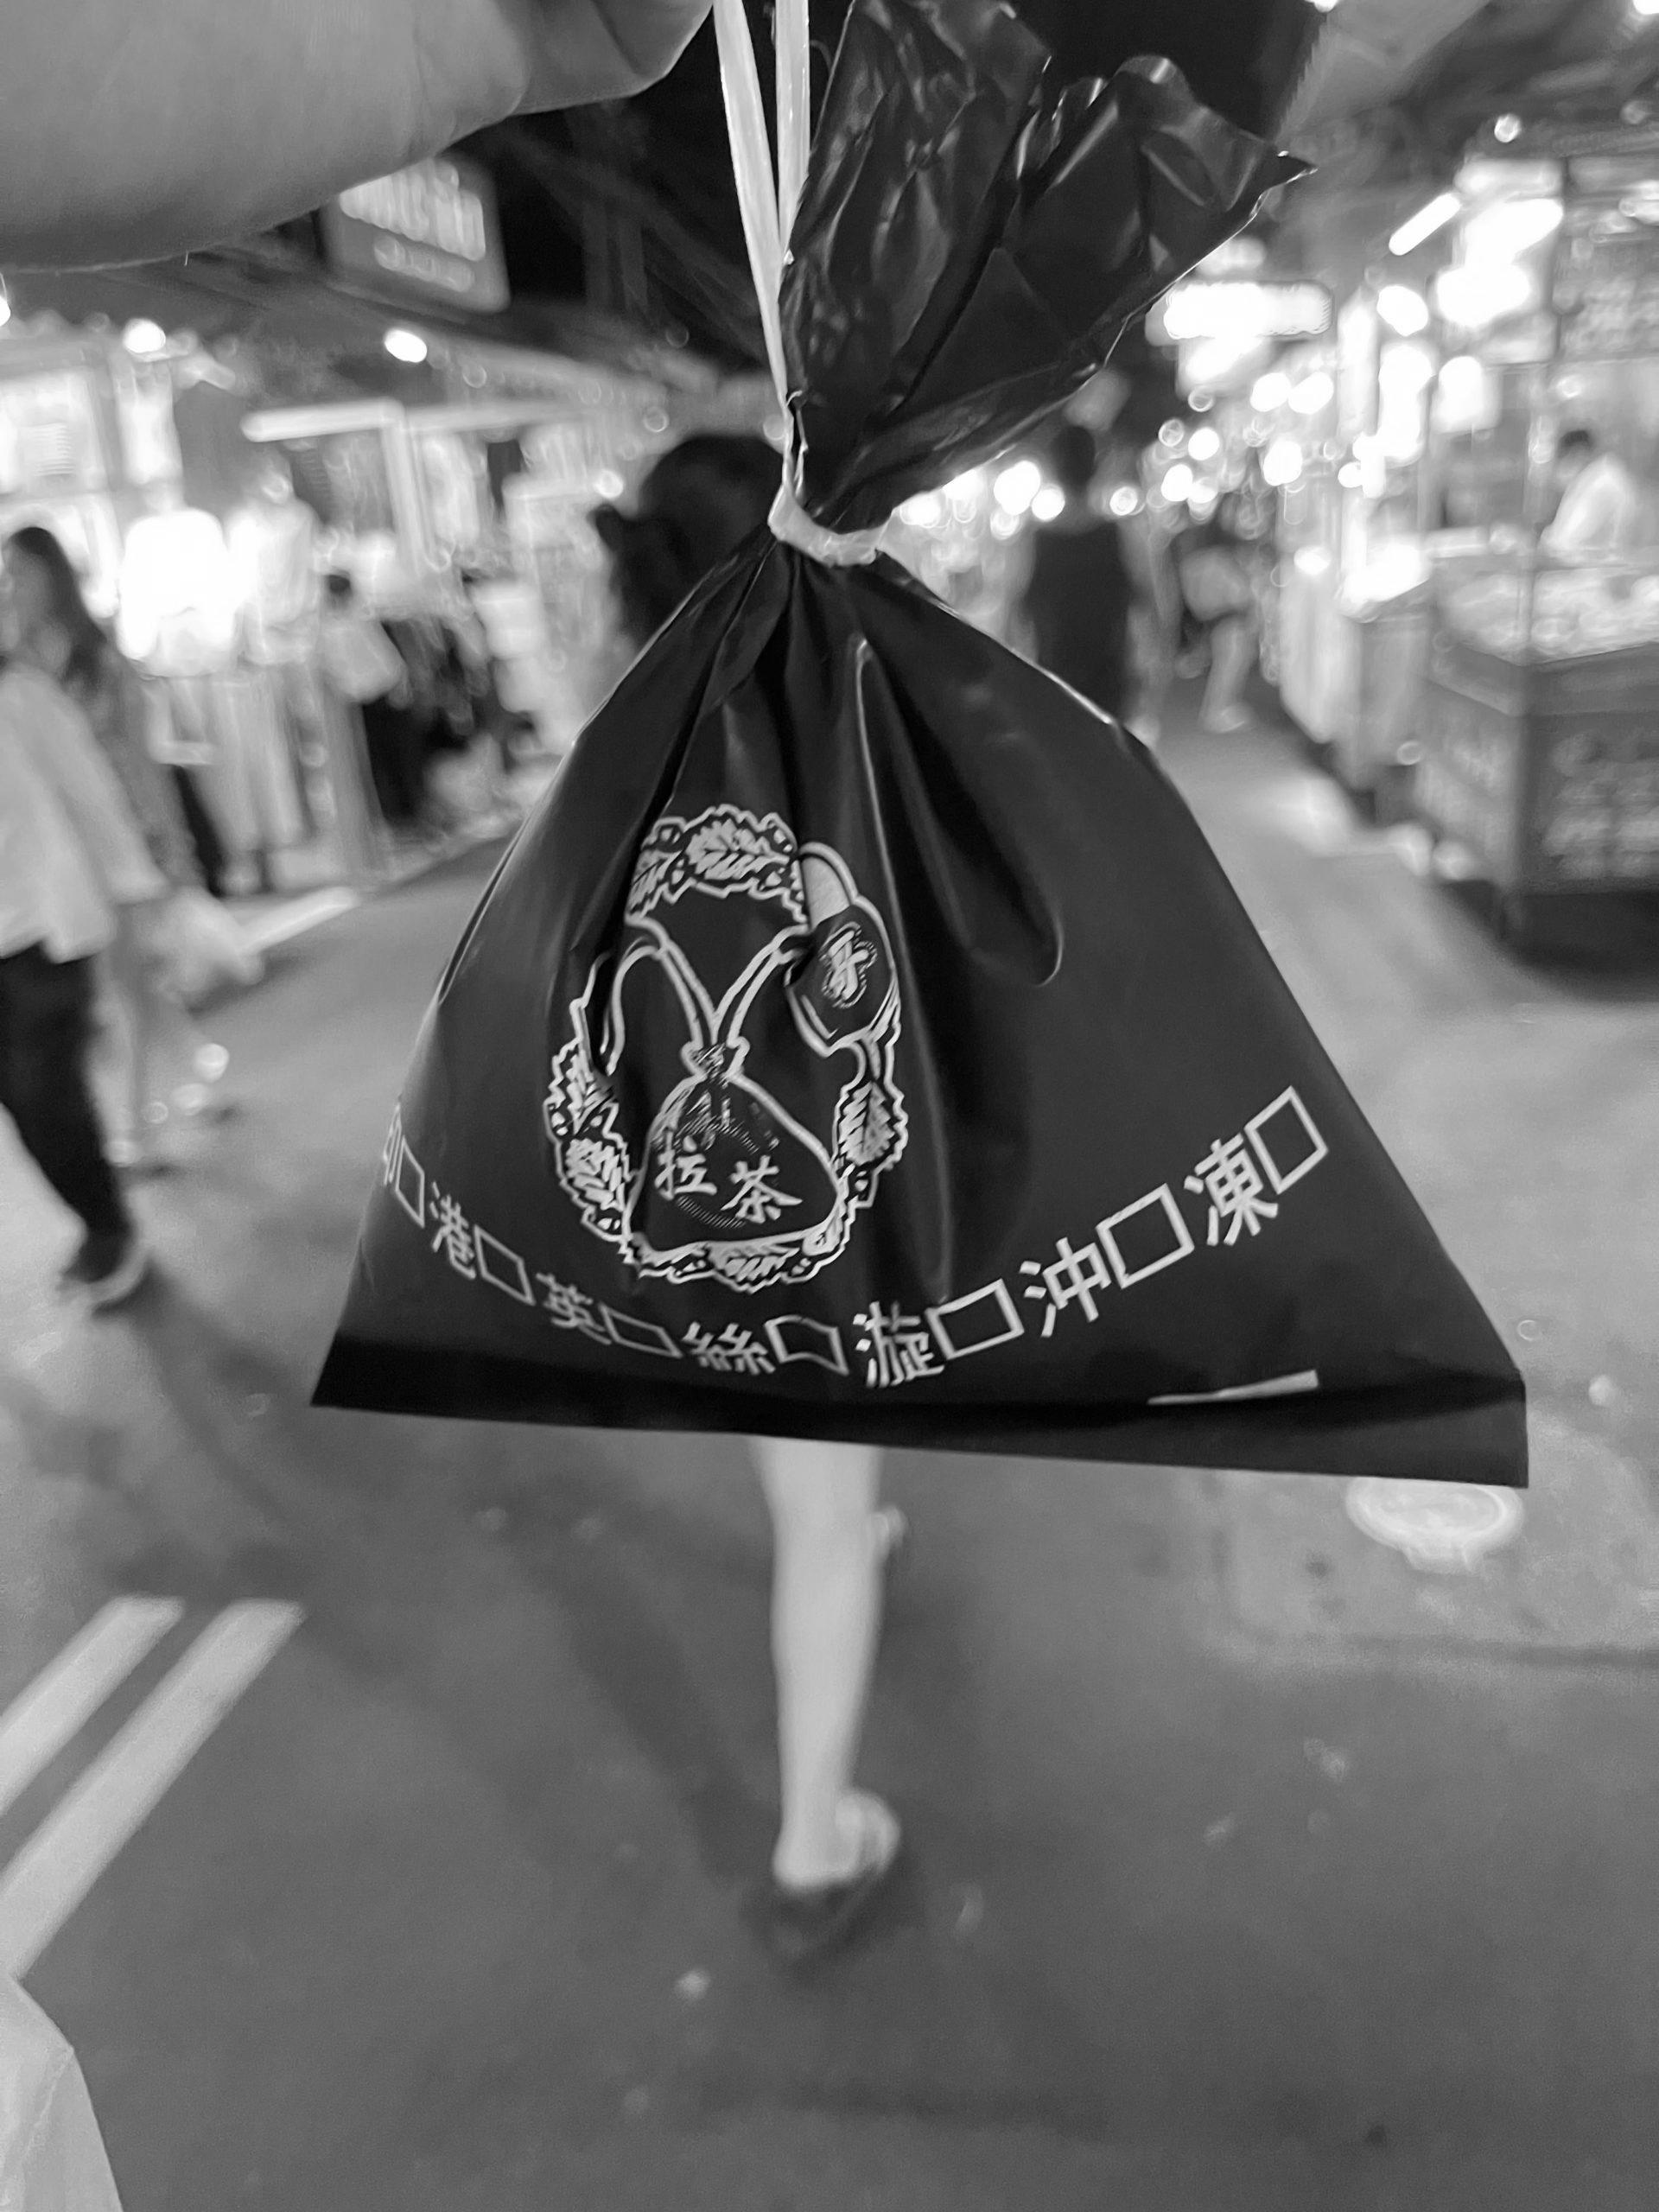 Drink in a bag at Nanya {night|night time|evening} market New Taipei {City|Metropolis}